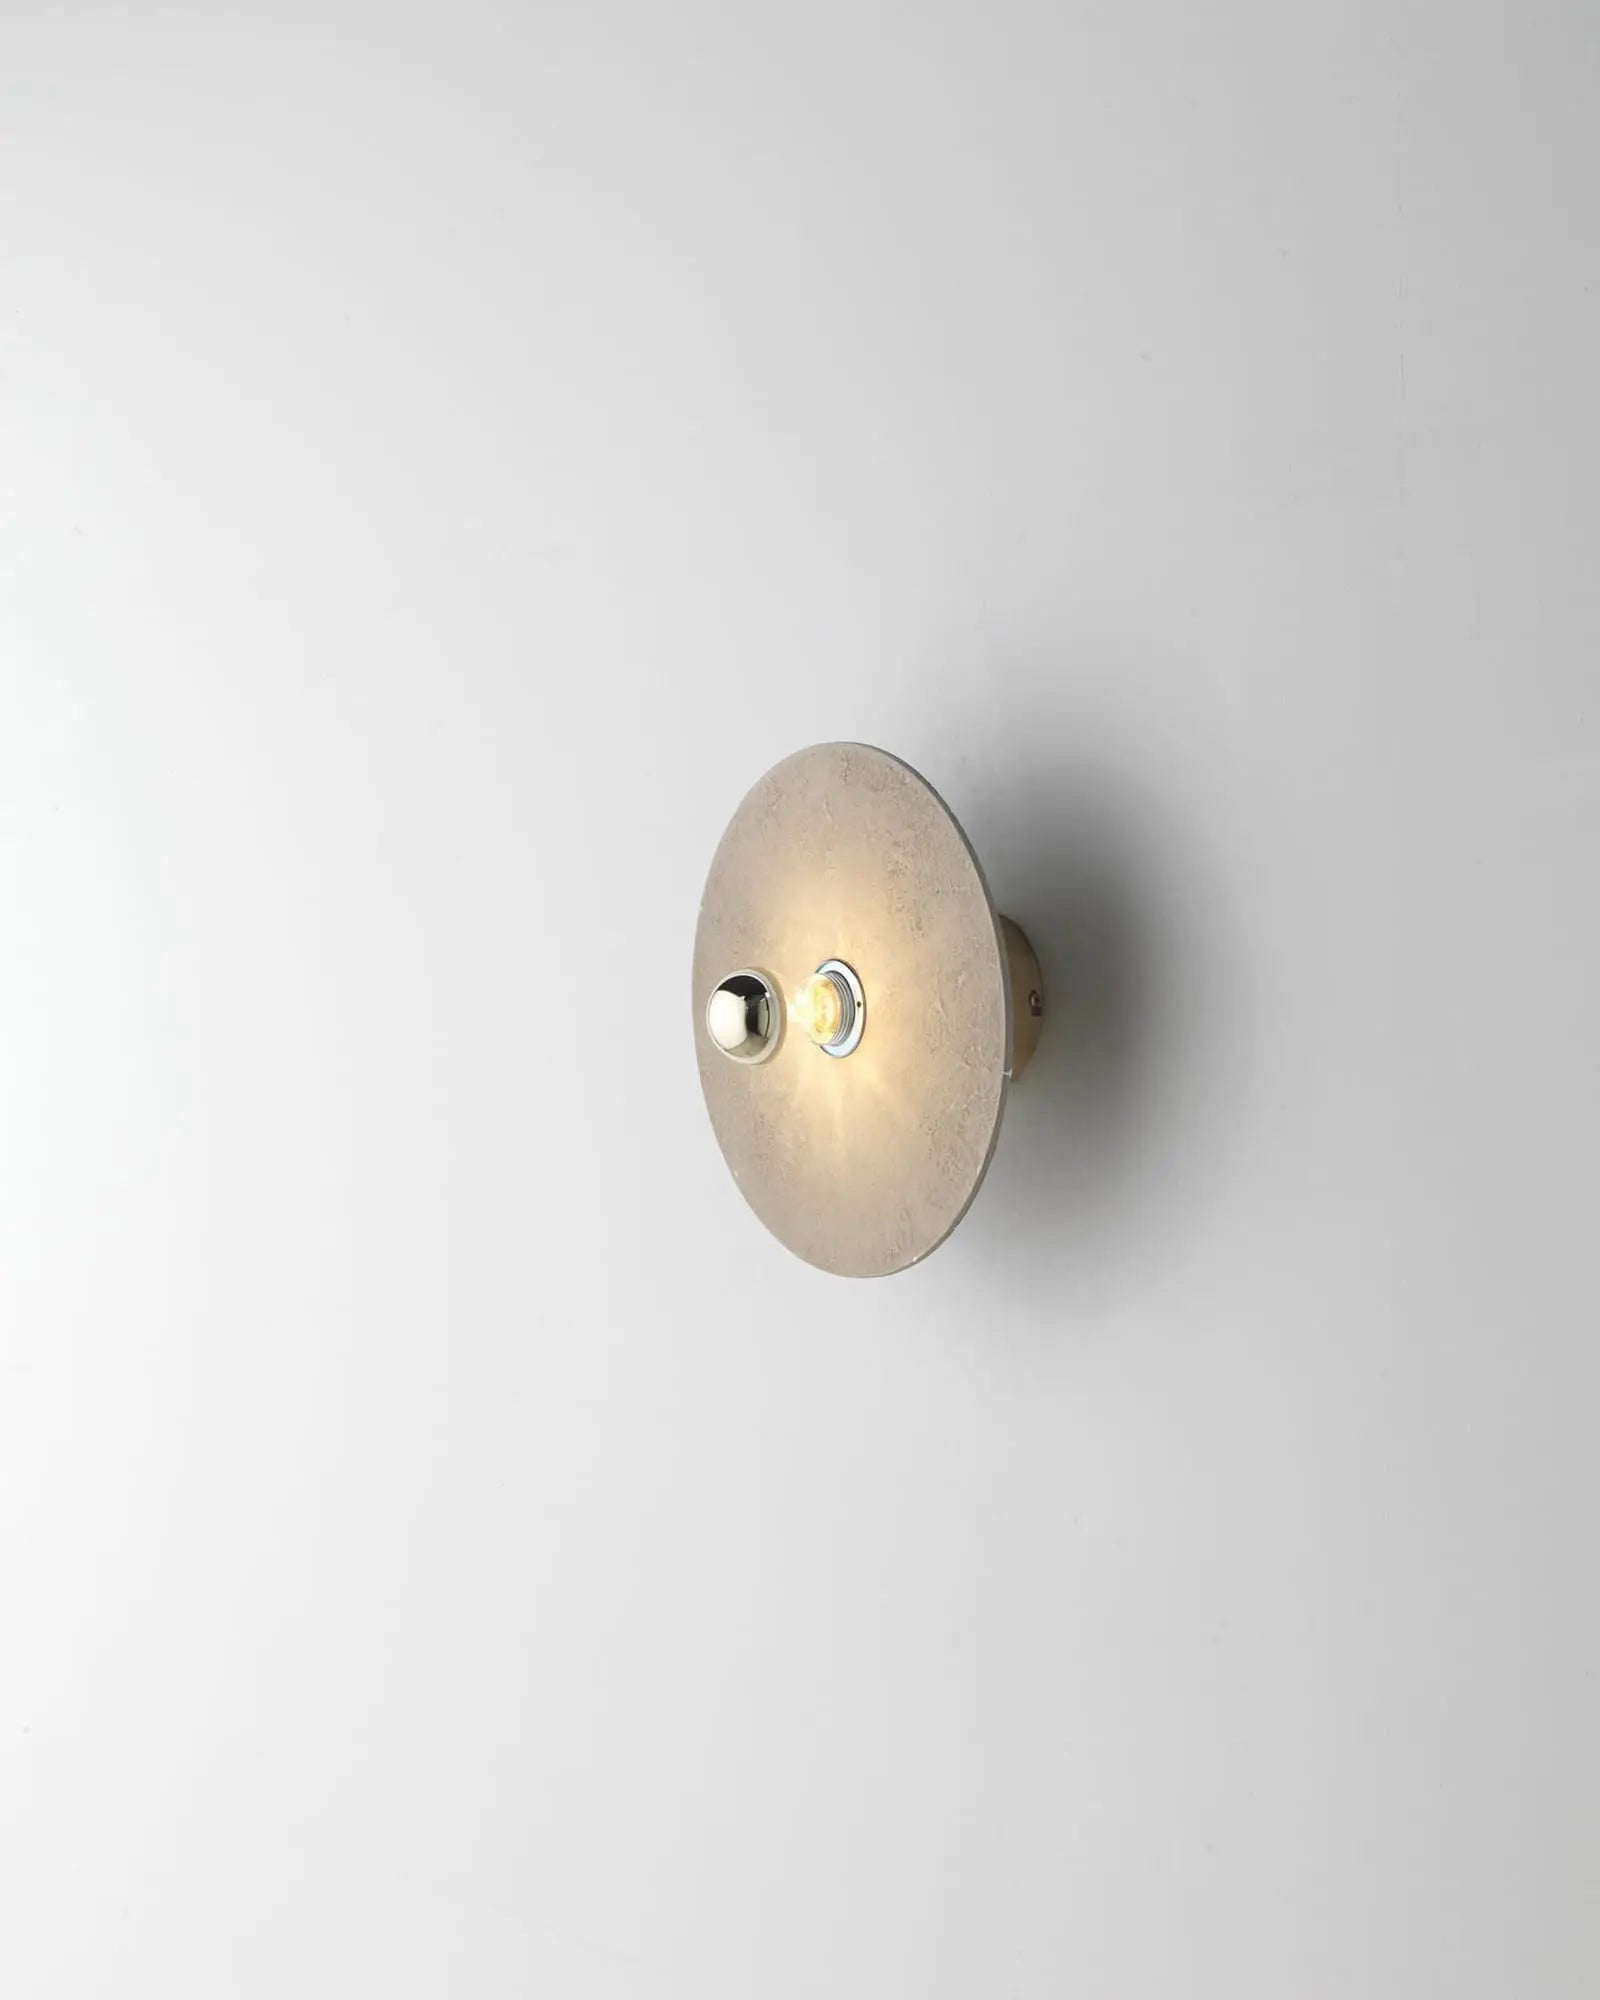 Kassy wall light minimalistic contemporary round alabaster shade product photo